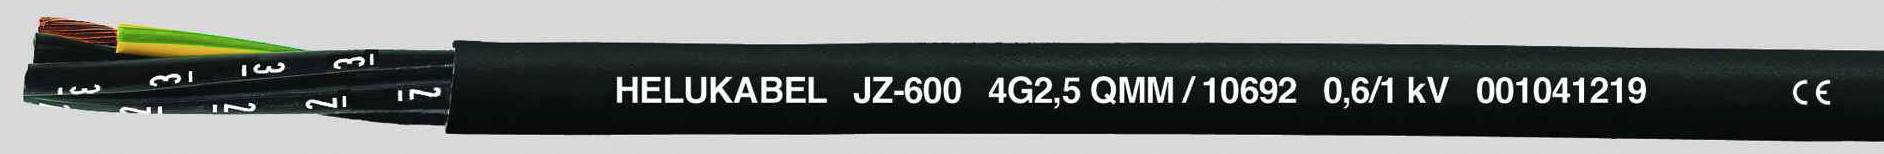 HELUKABEL JZ-600 Steuerleitung 4 G 1.50 mm² Schwarz 10659-500 500 m